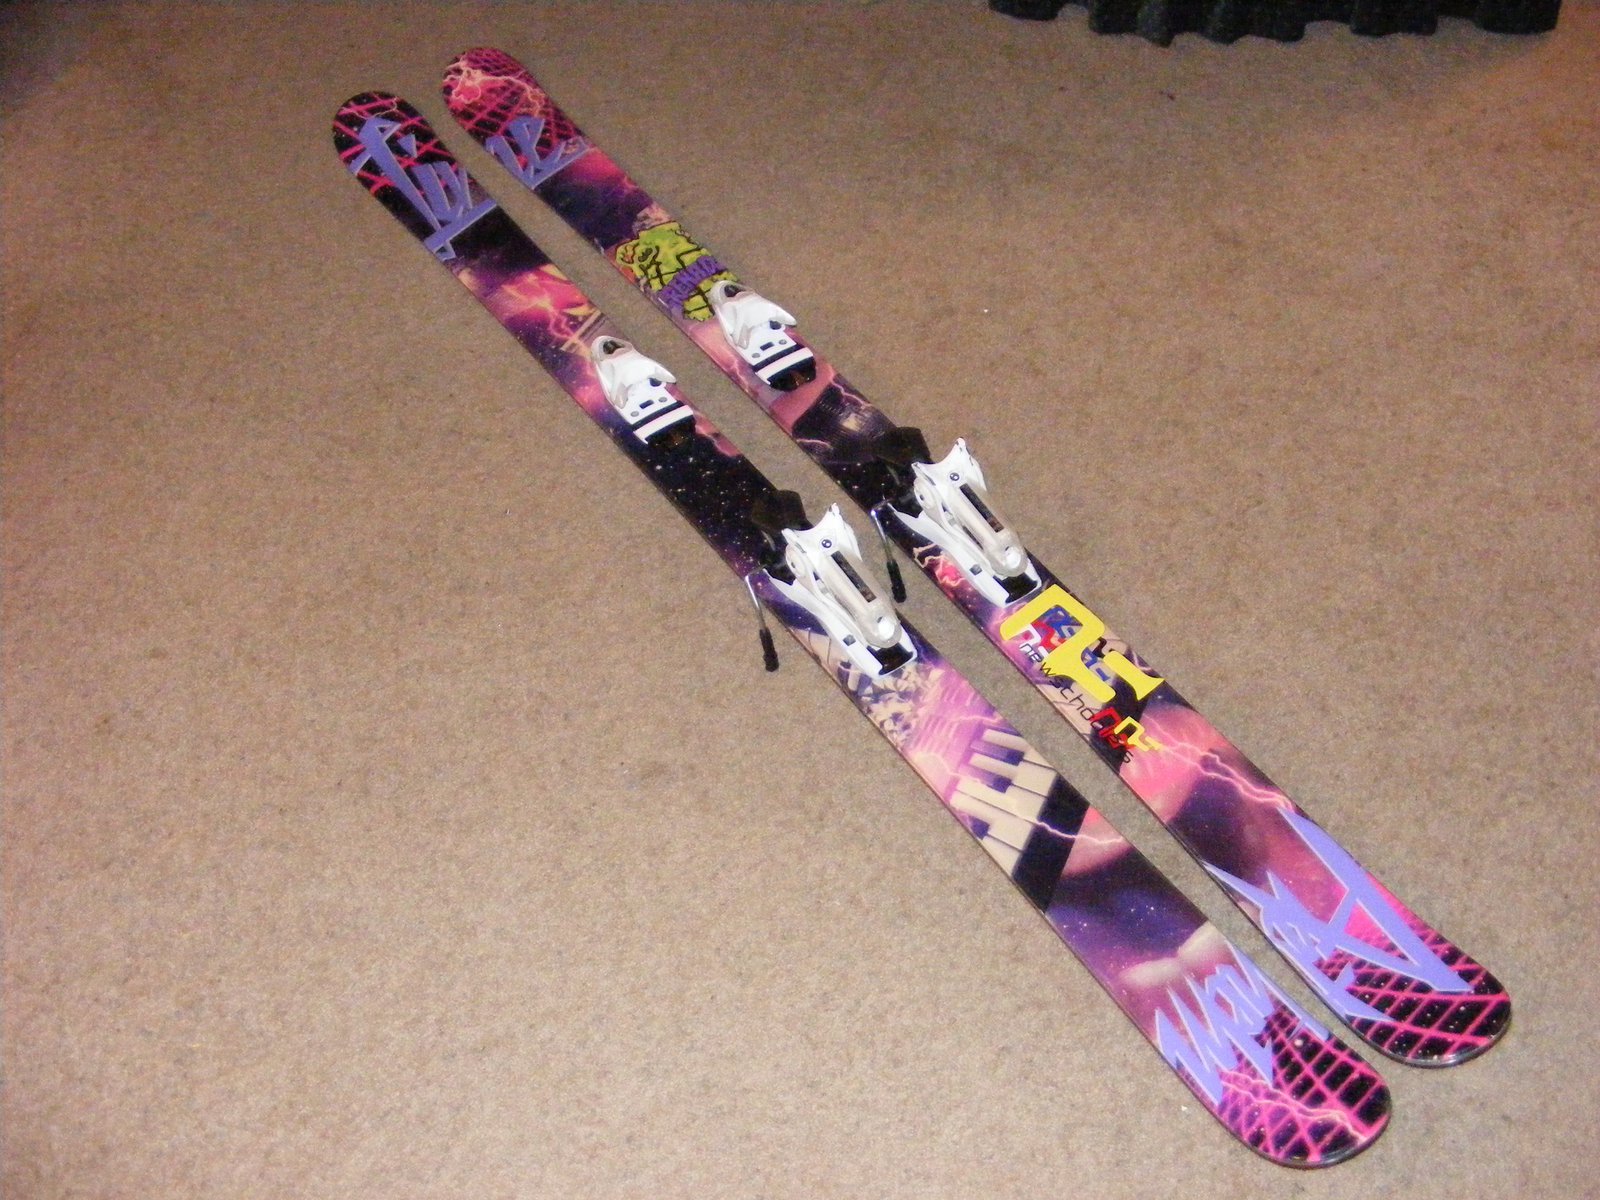 My new skiis